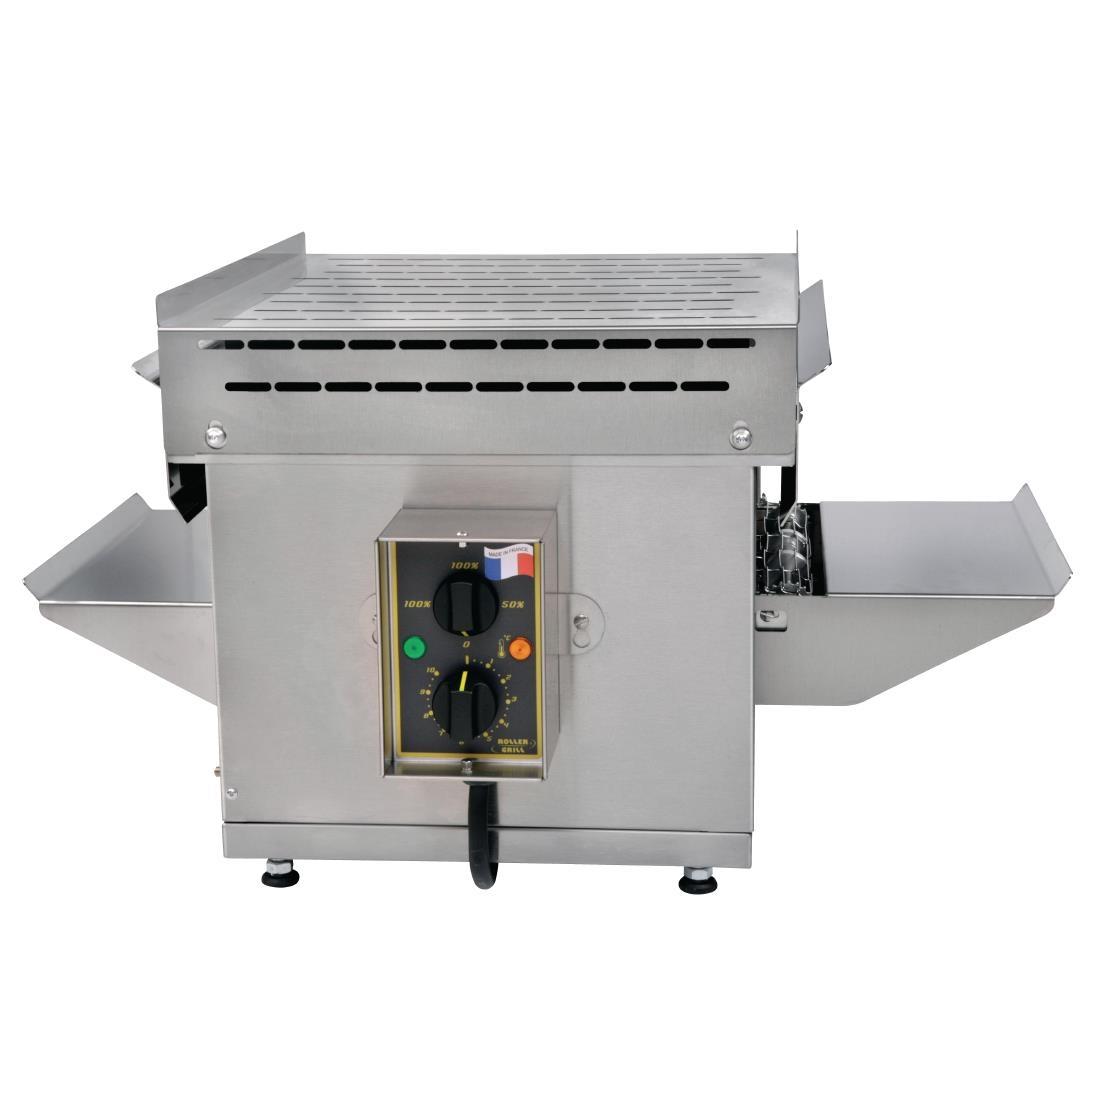 Roller Grill Conveyor Oven CT3000 - CM933  - 1